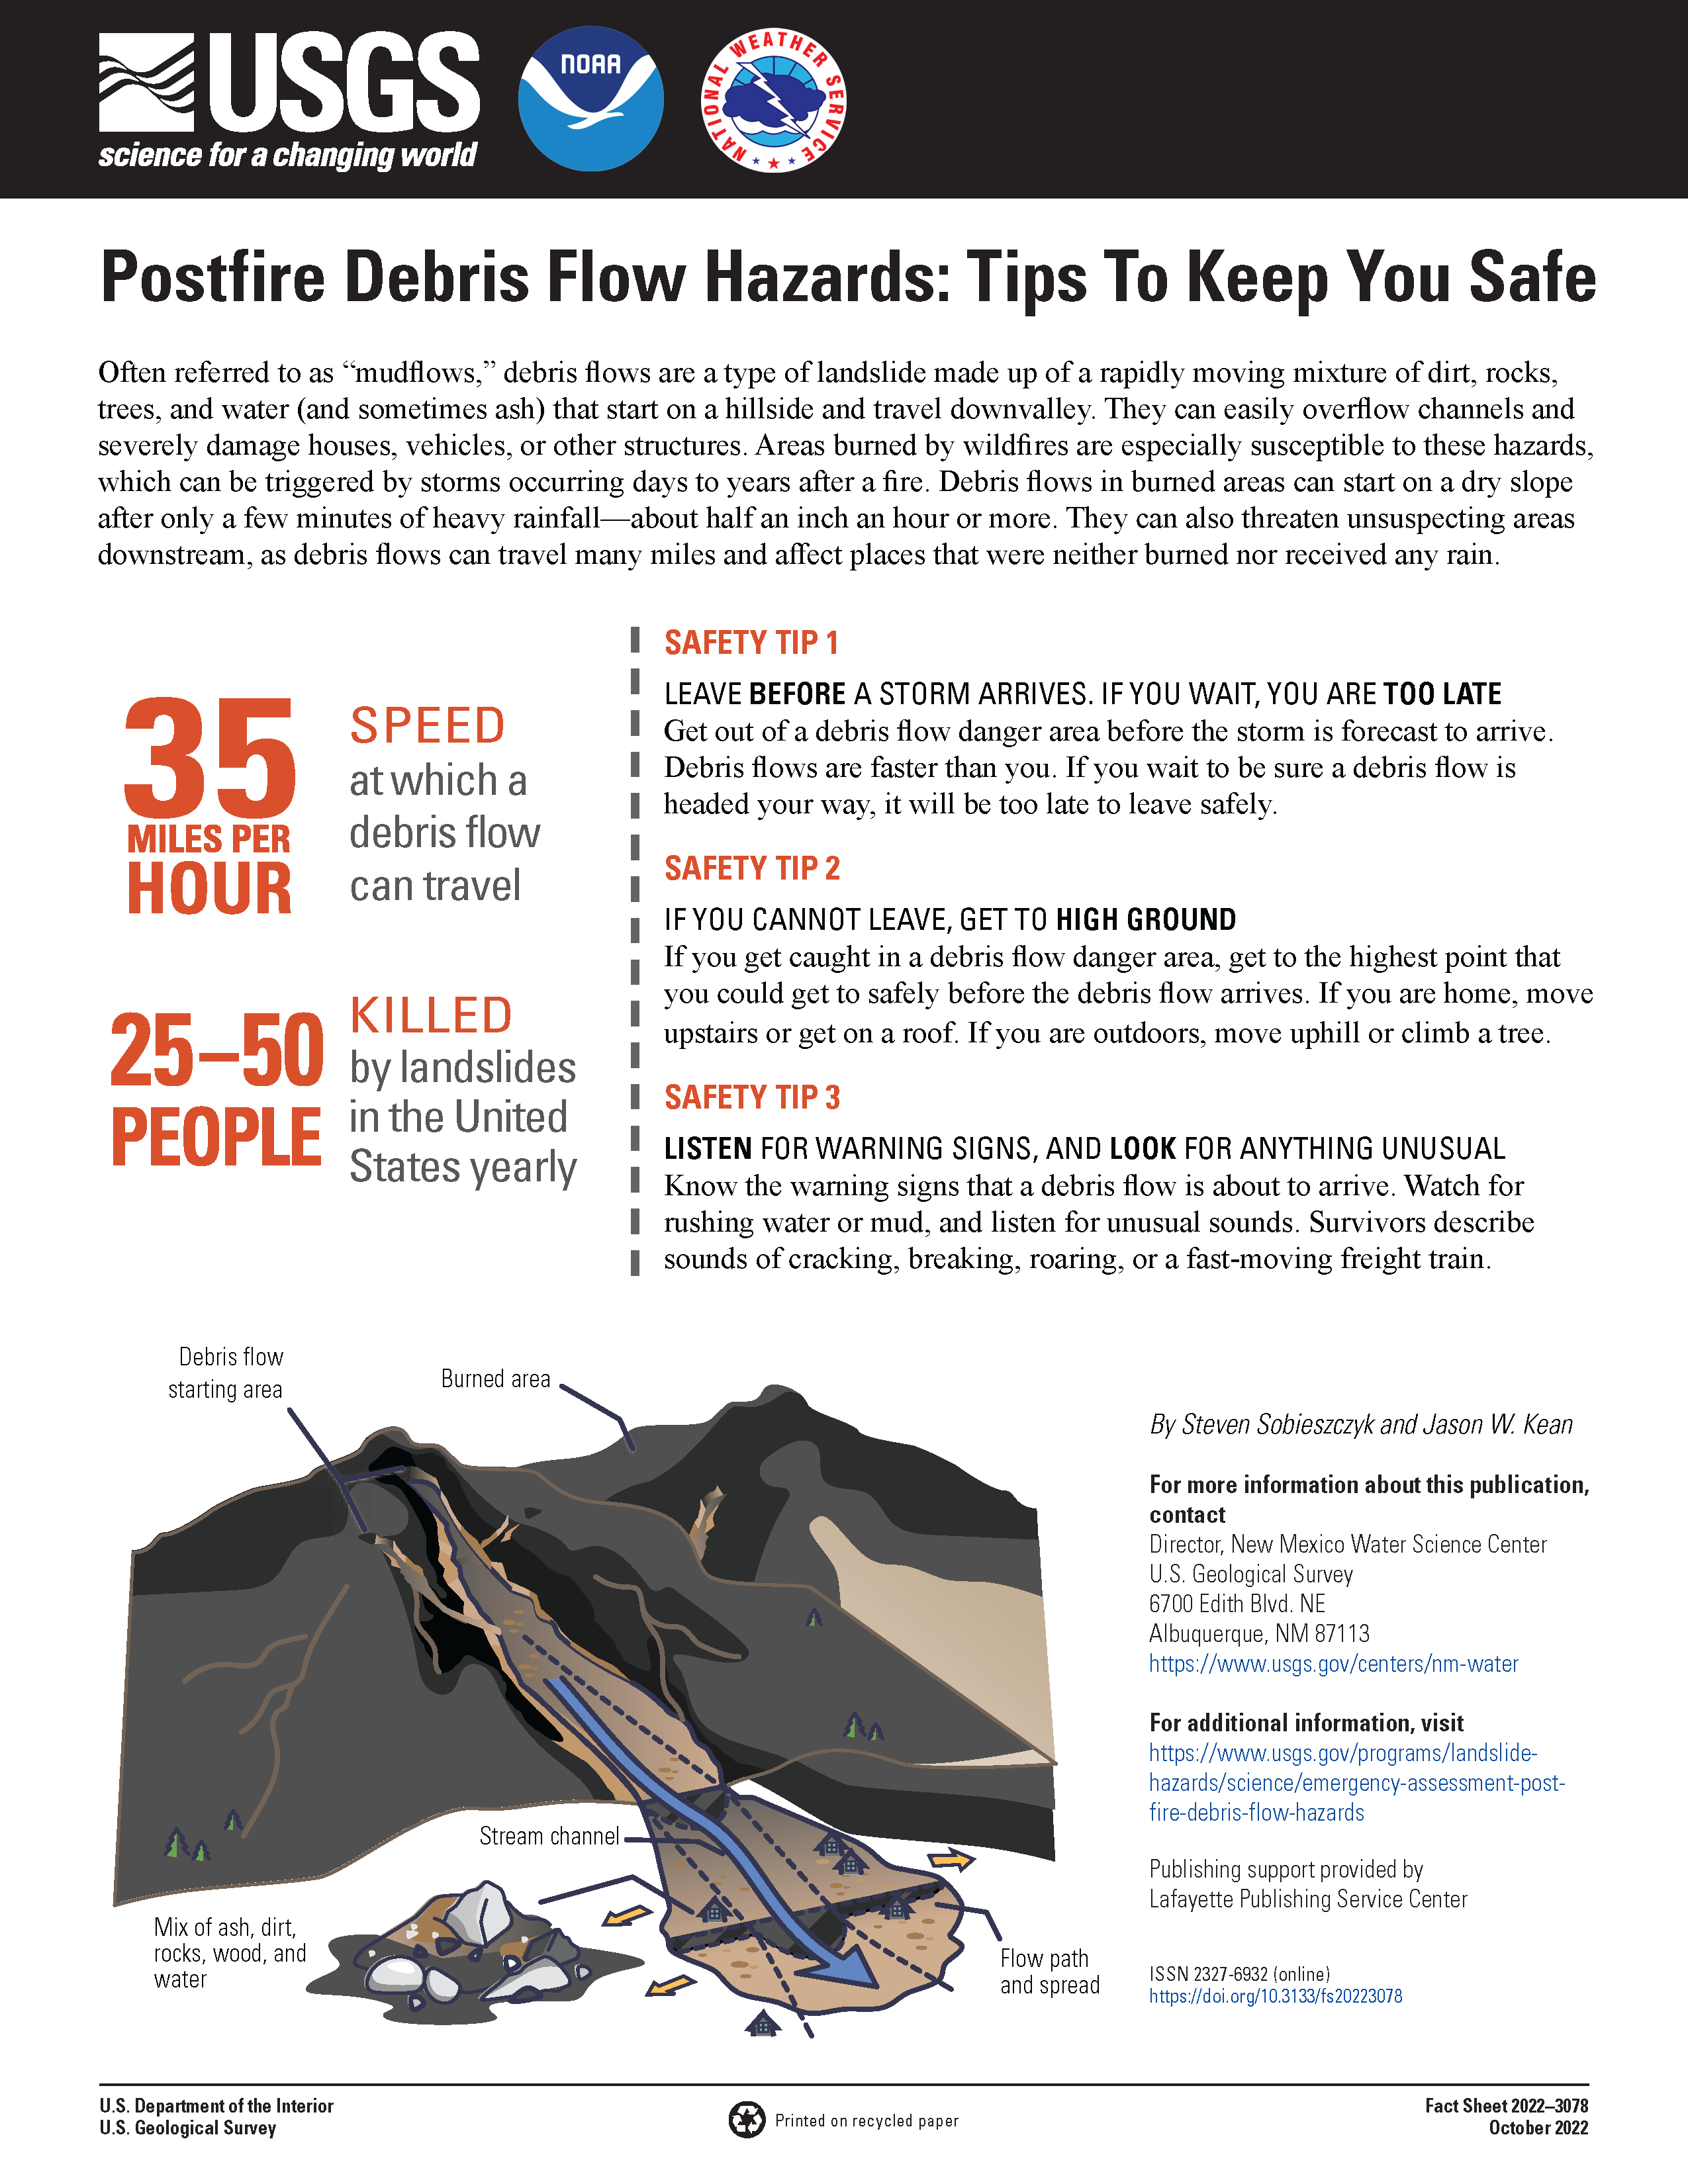 Postfire Debris Flow Hazards: Tips to Keep You Safe